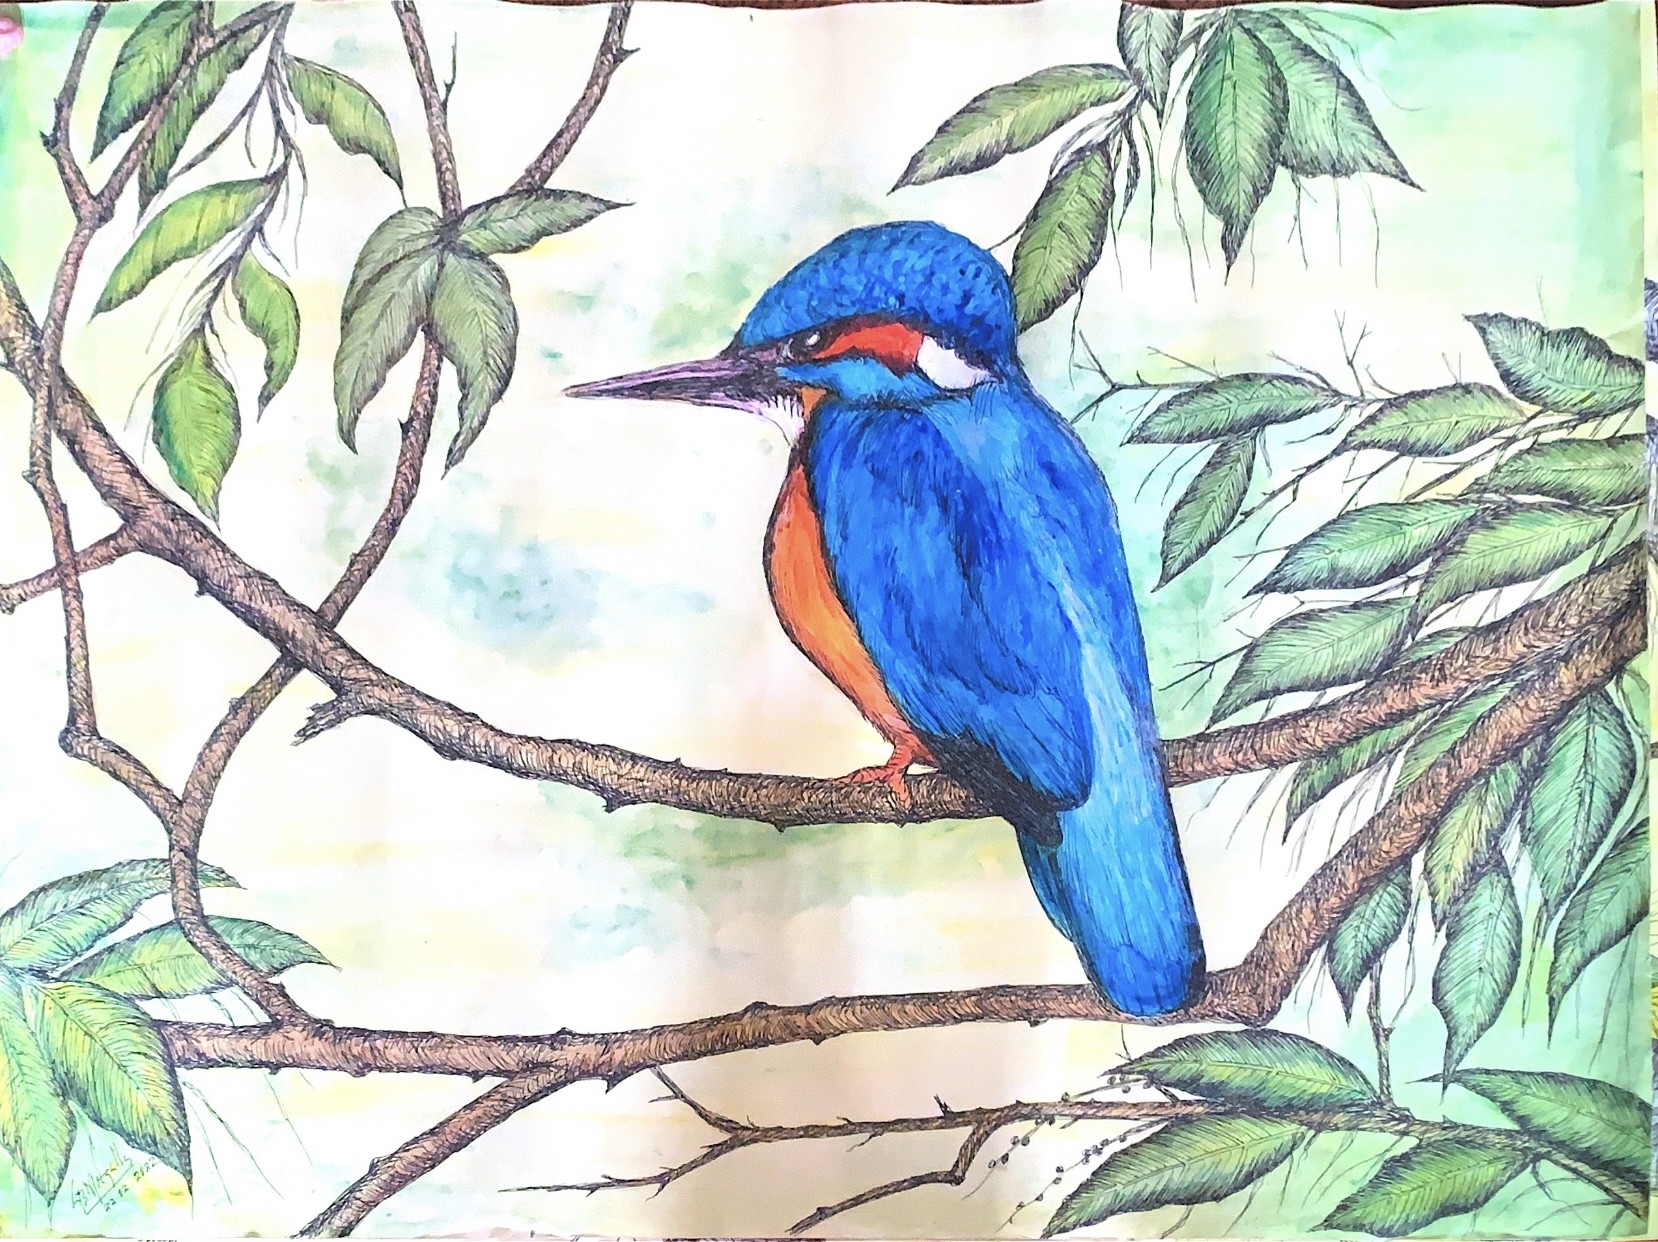 Lanka Birds by Gamini Meegalla